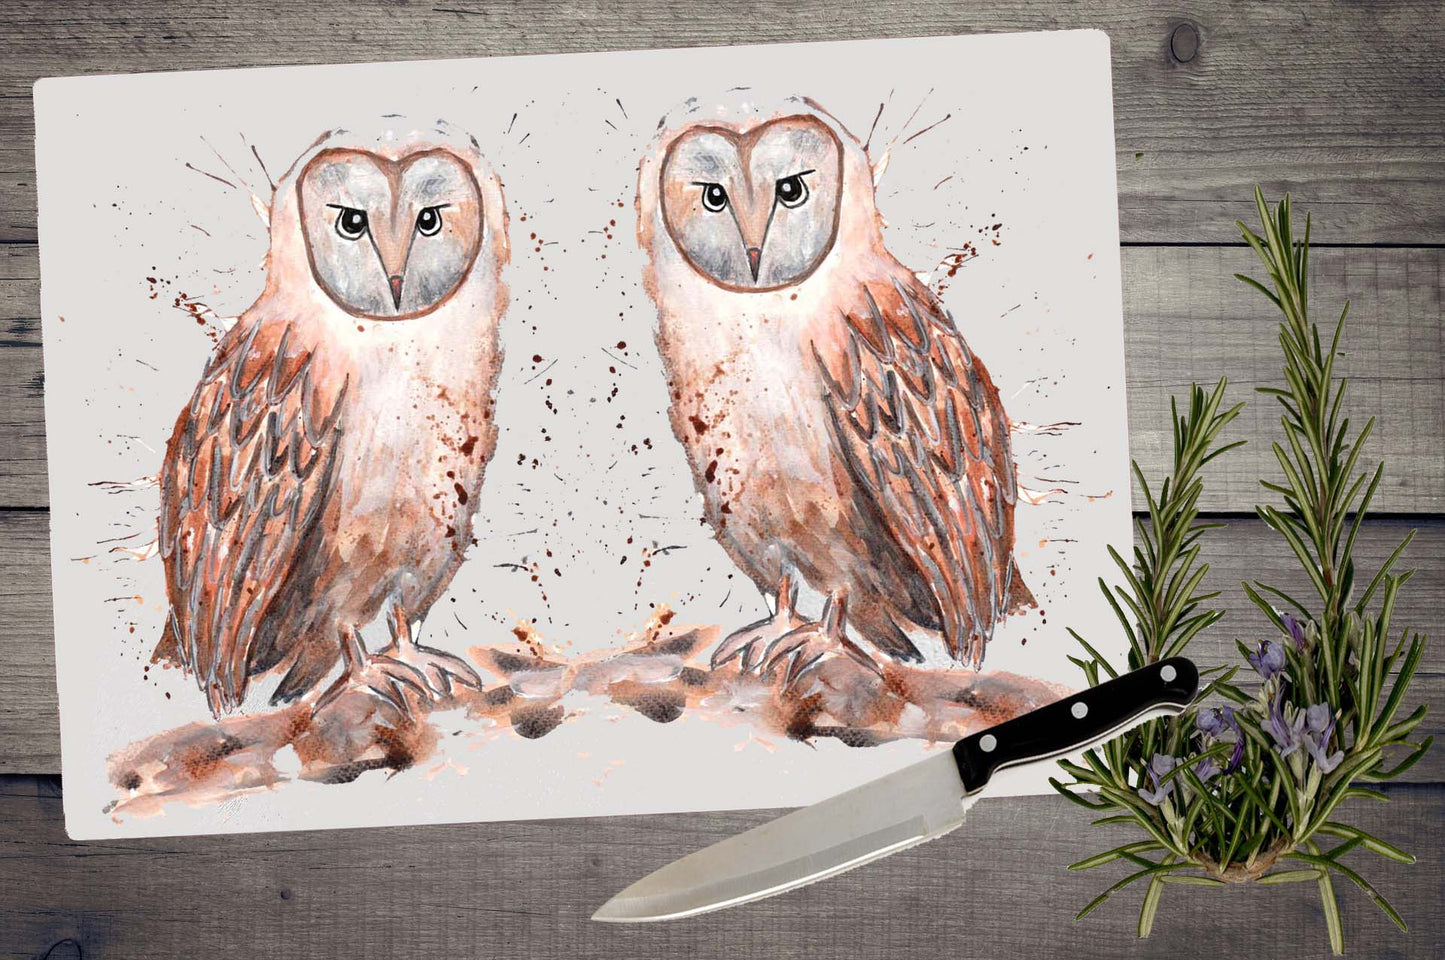 Owl chopping board / Worktop saver